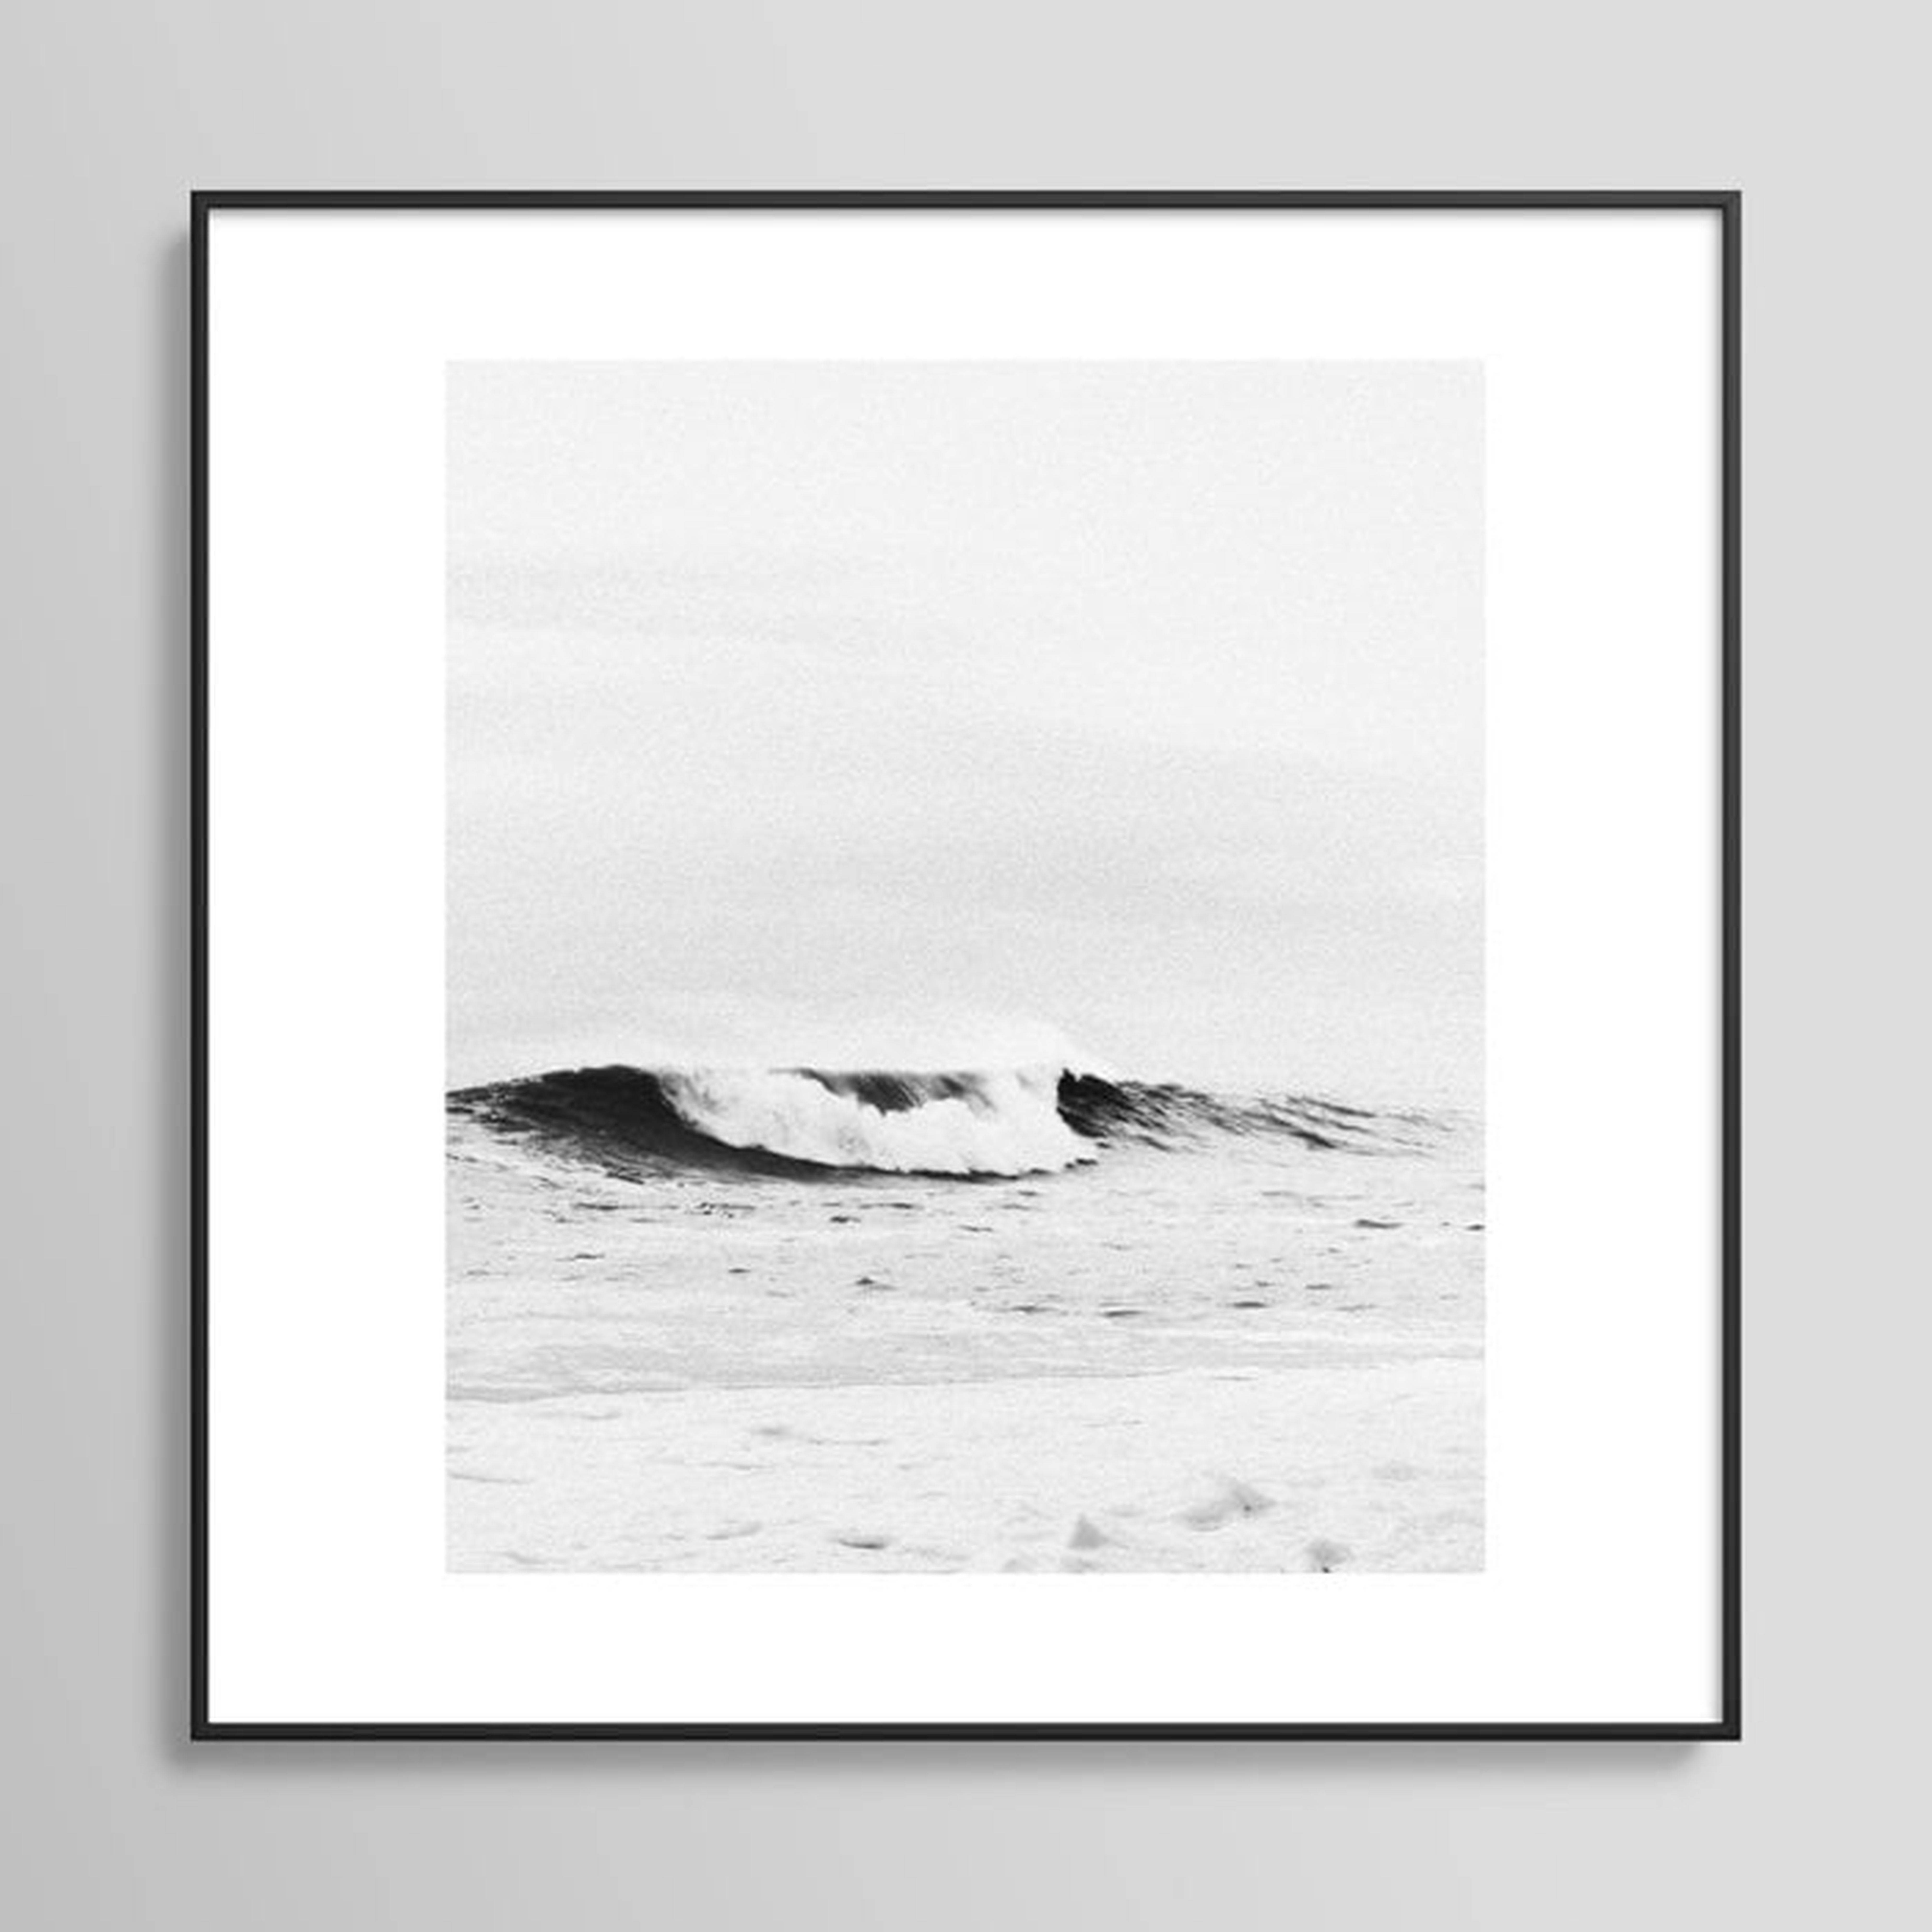 Minimalist Black and White Ocean Wave Photograph Framed Art Print - Society6